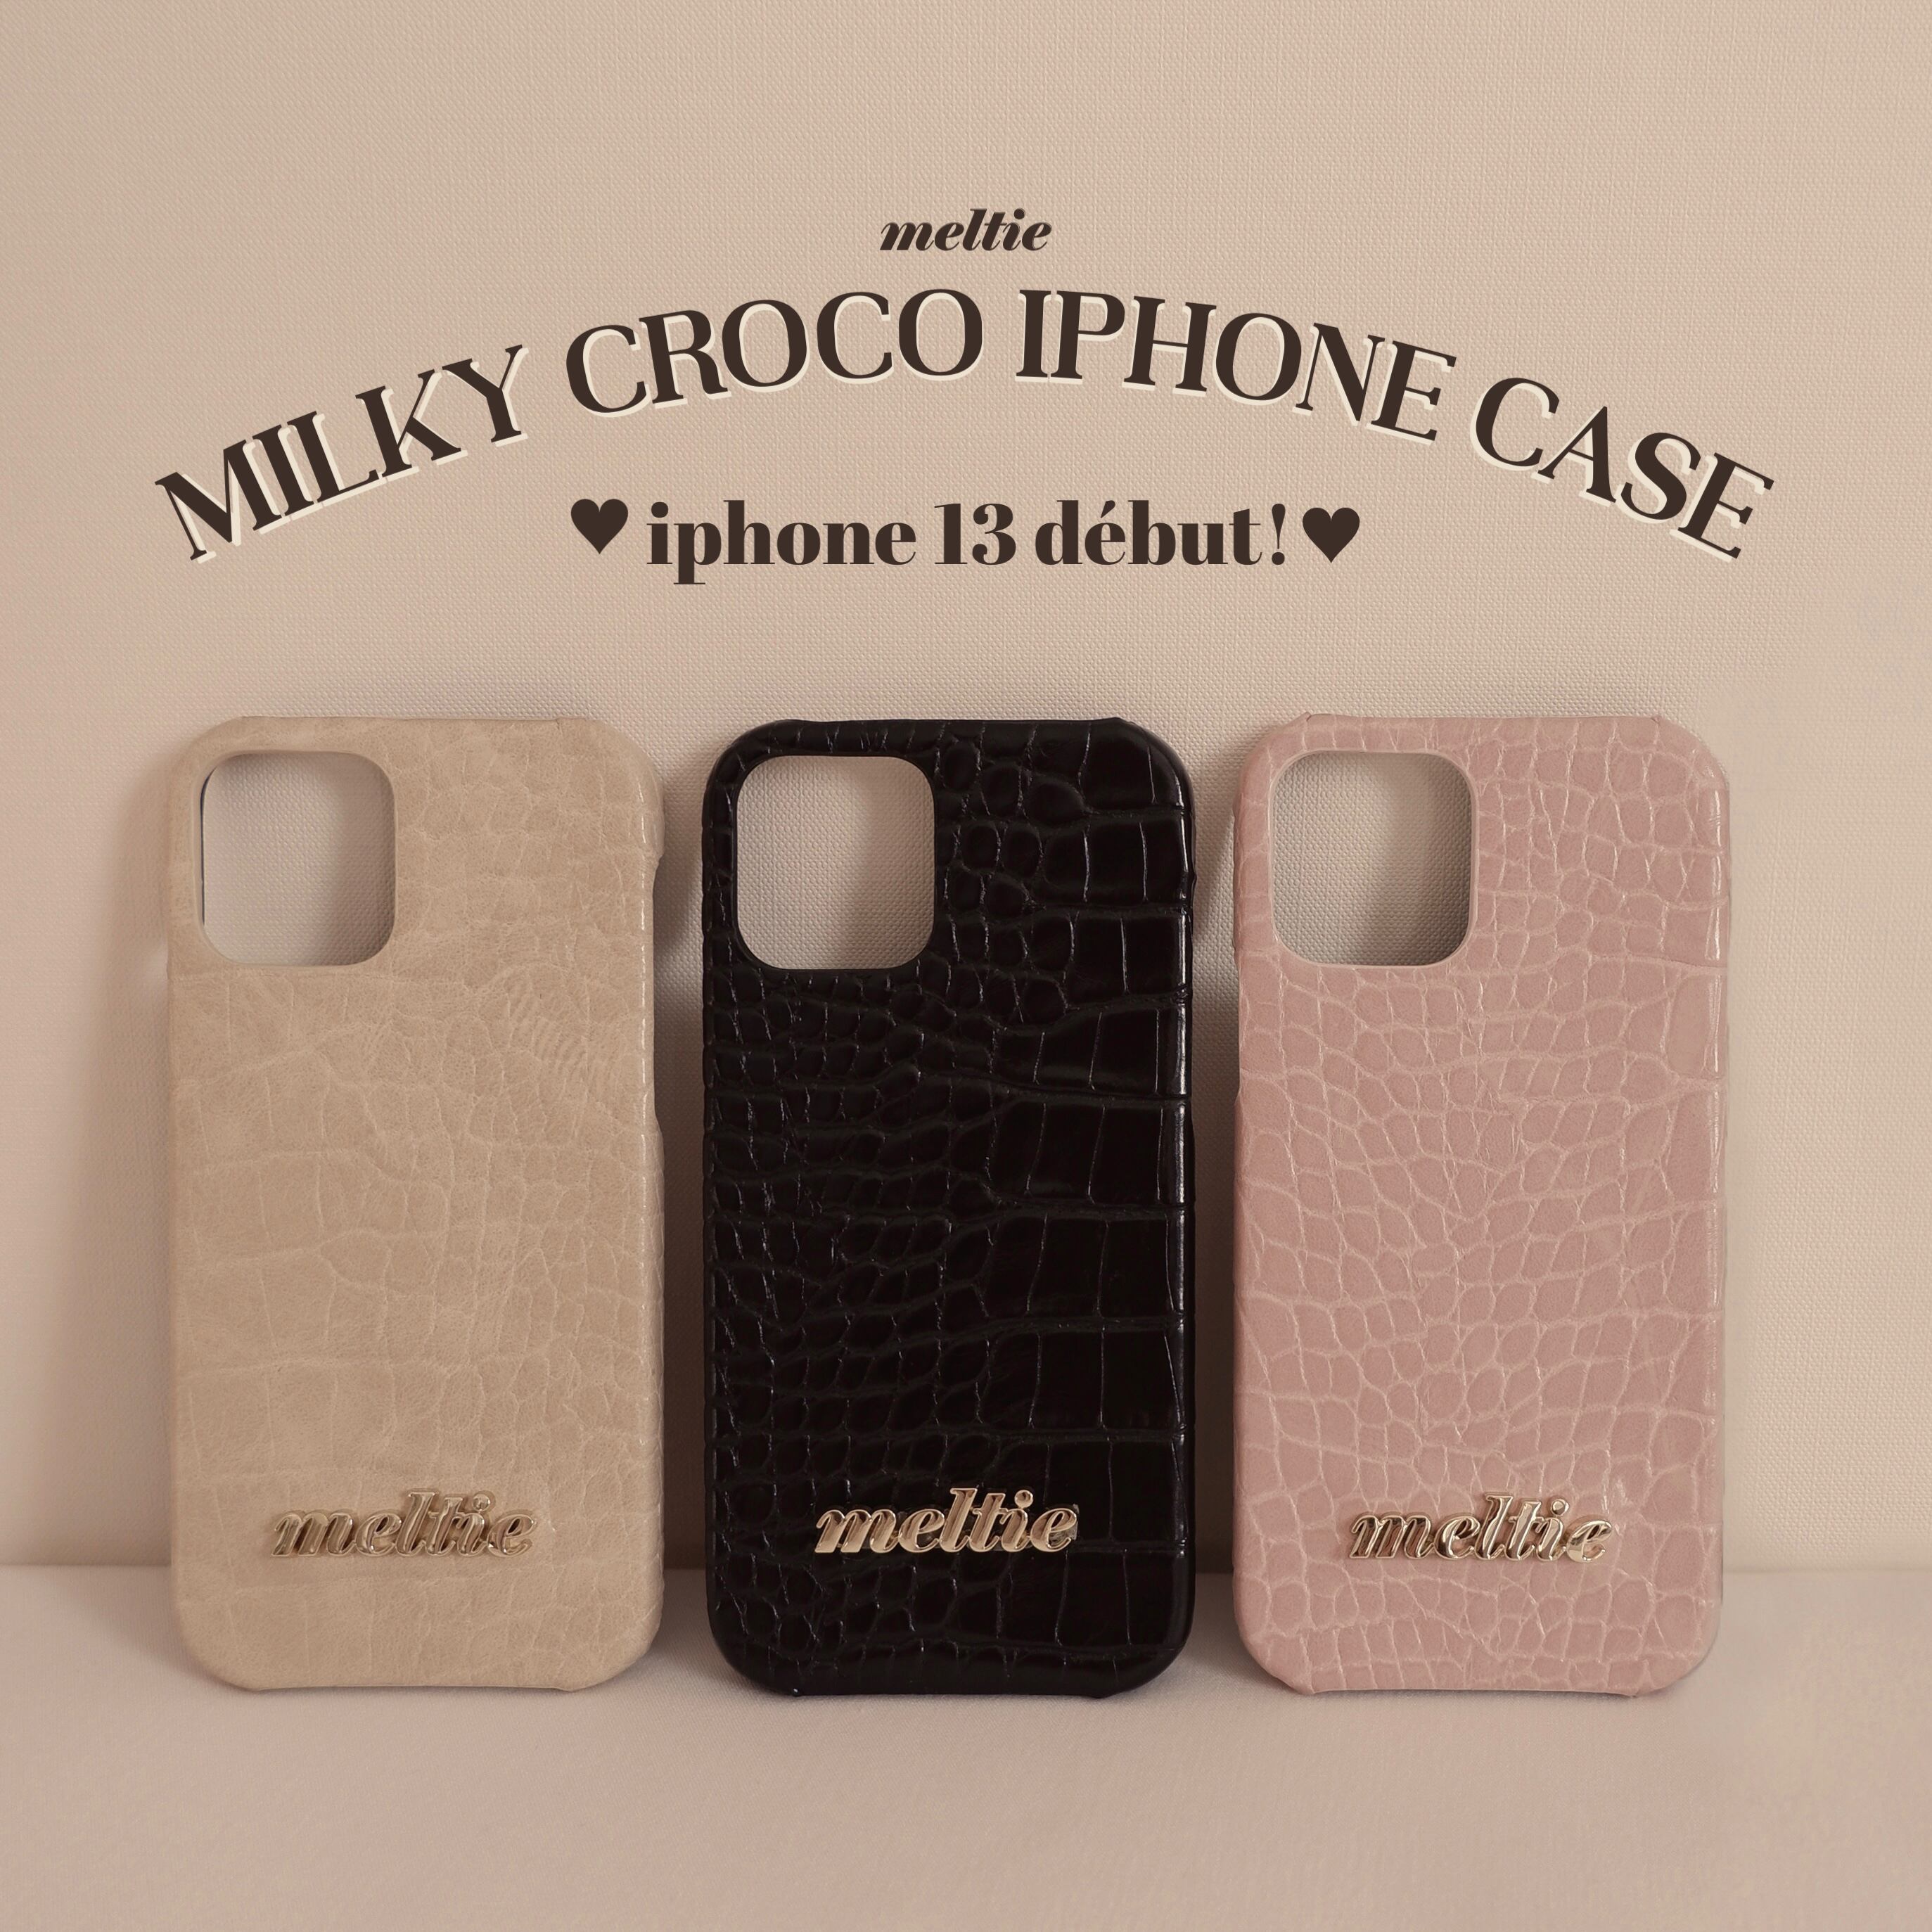 original milky croco iphone case - iphone13